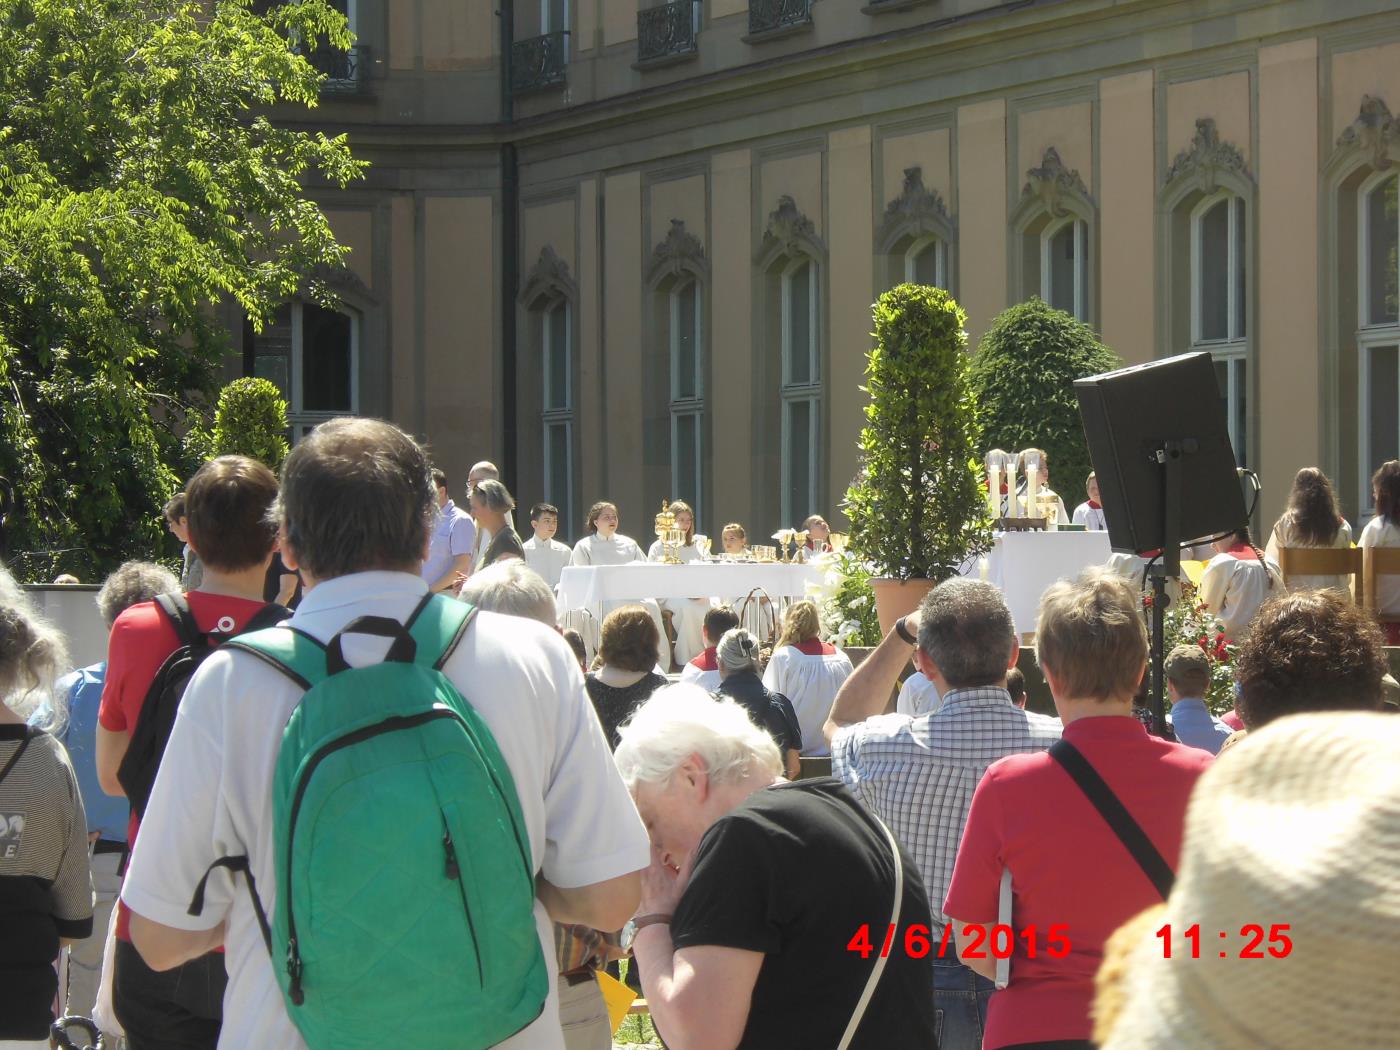 Kirchentag Stuttgart – Police react nervously